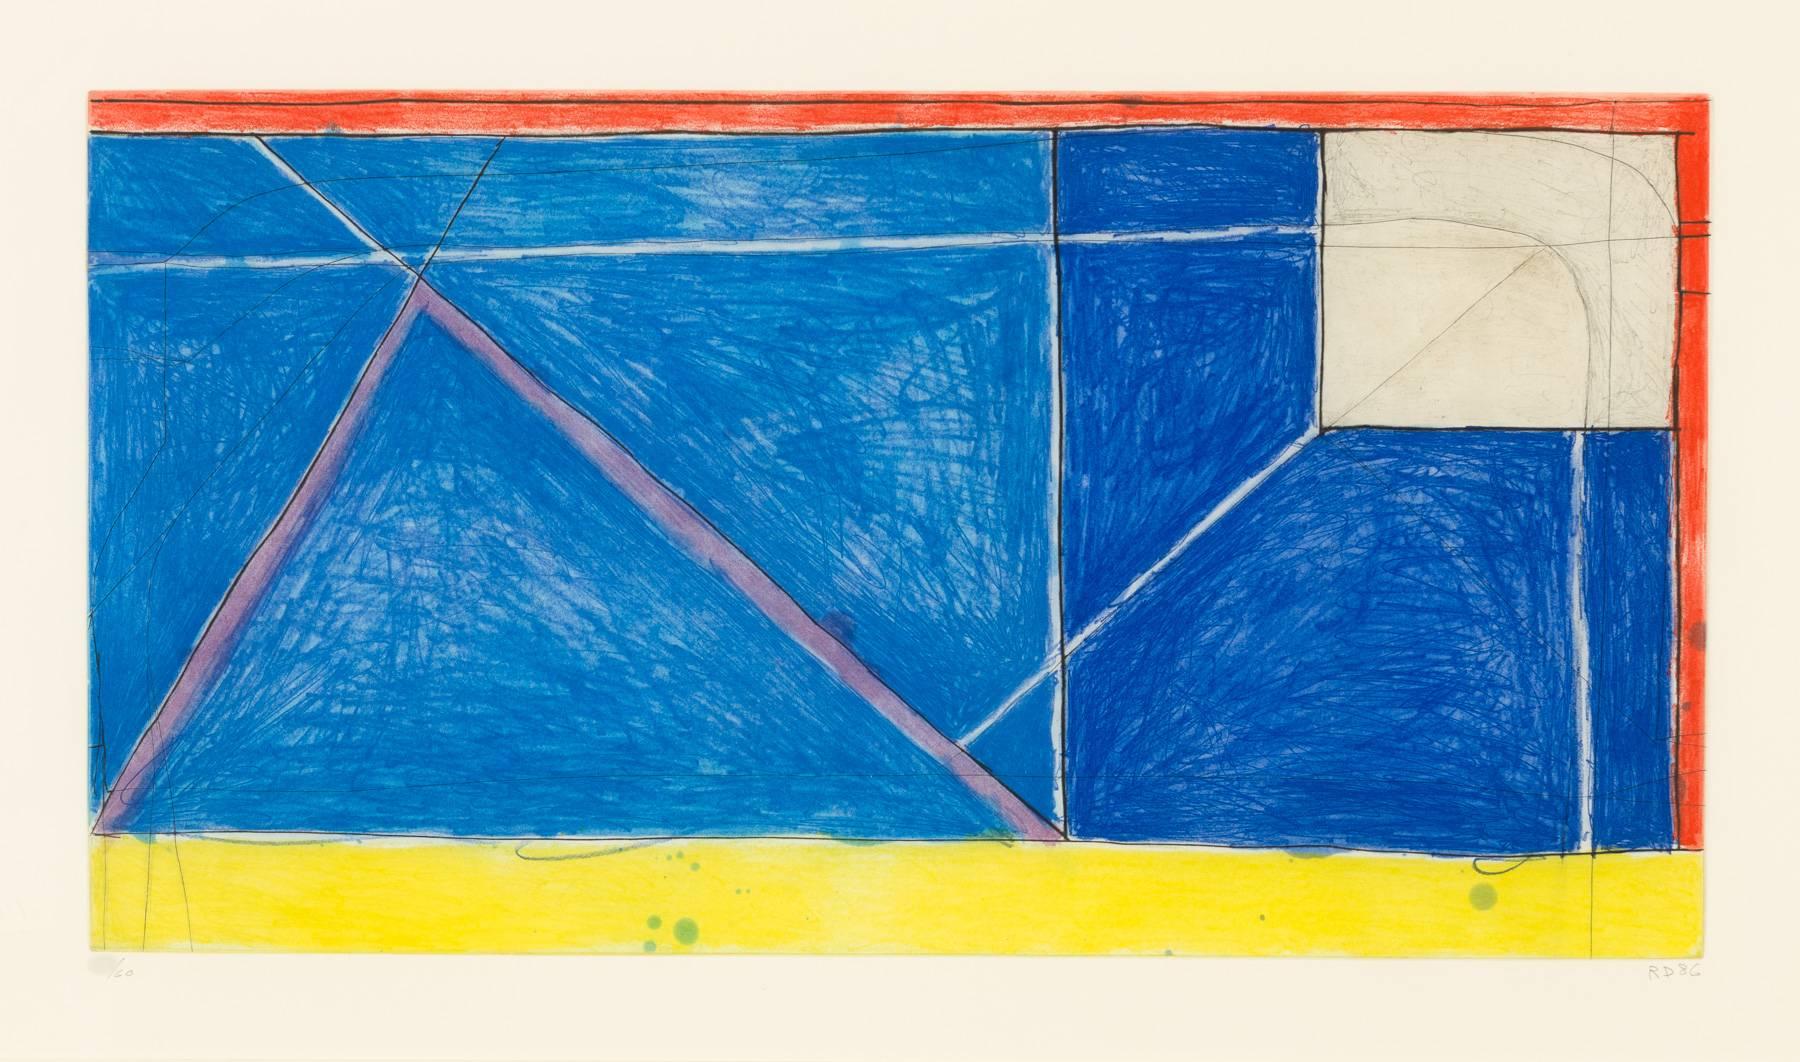 Richard Diebenkorn Abstract Print - RED-YELLOW-BLUE